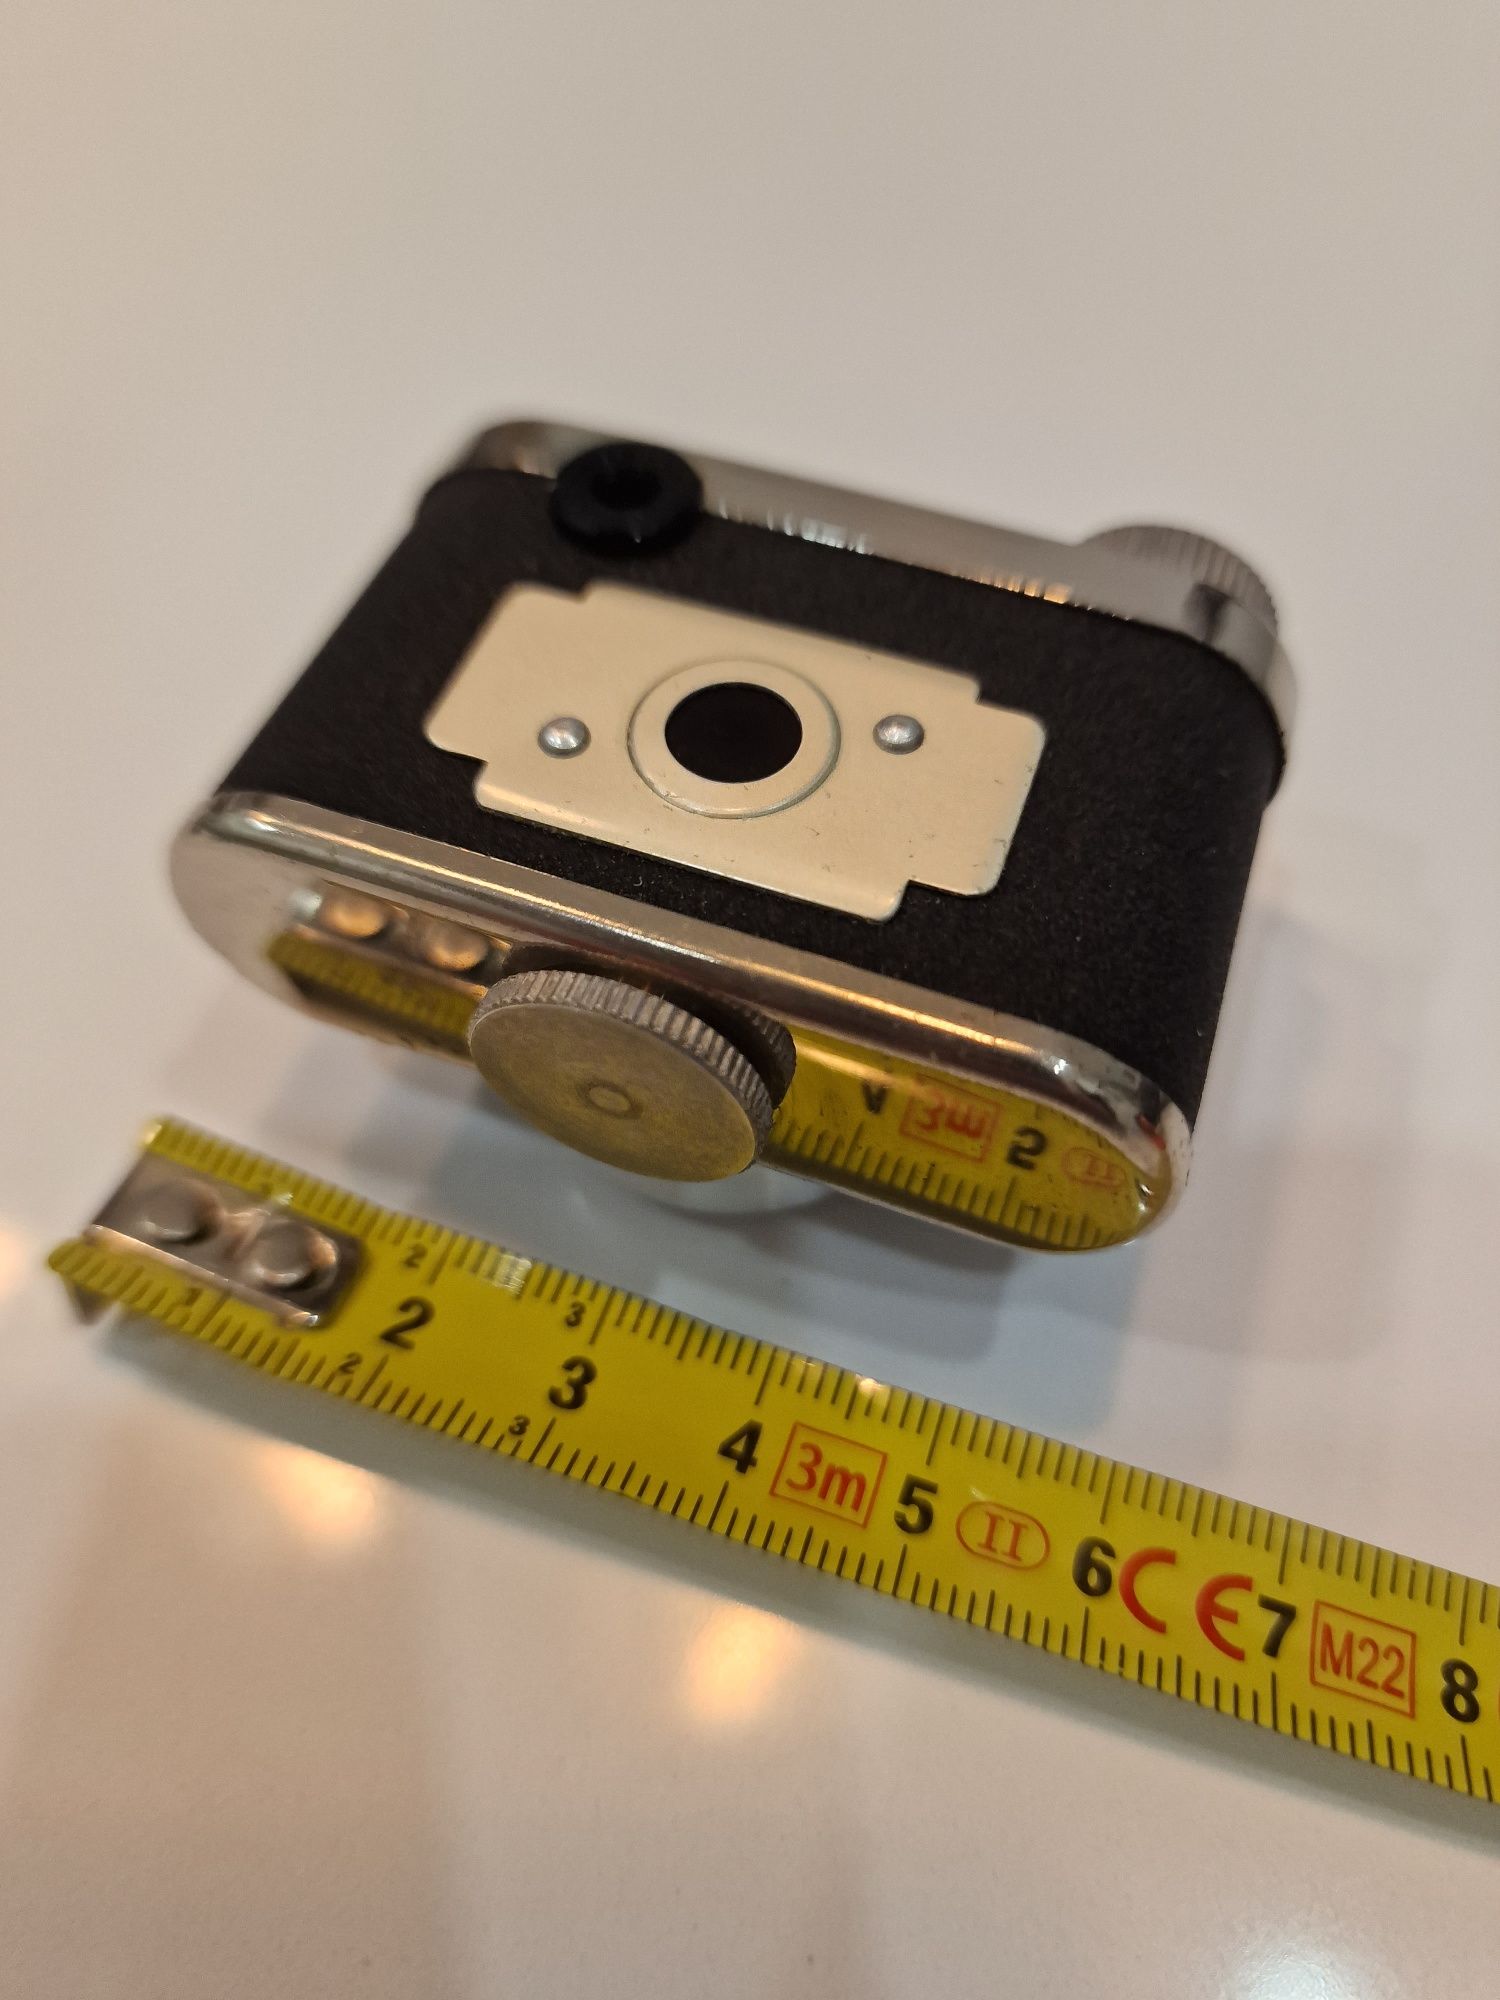 Micro câmara Petie 16mm (1958)